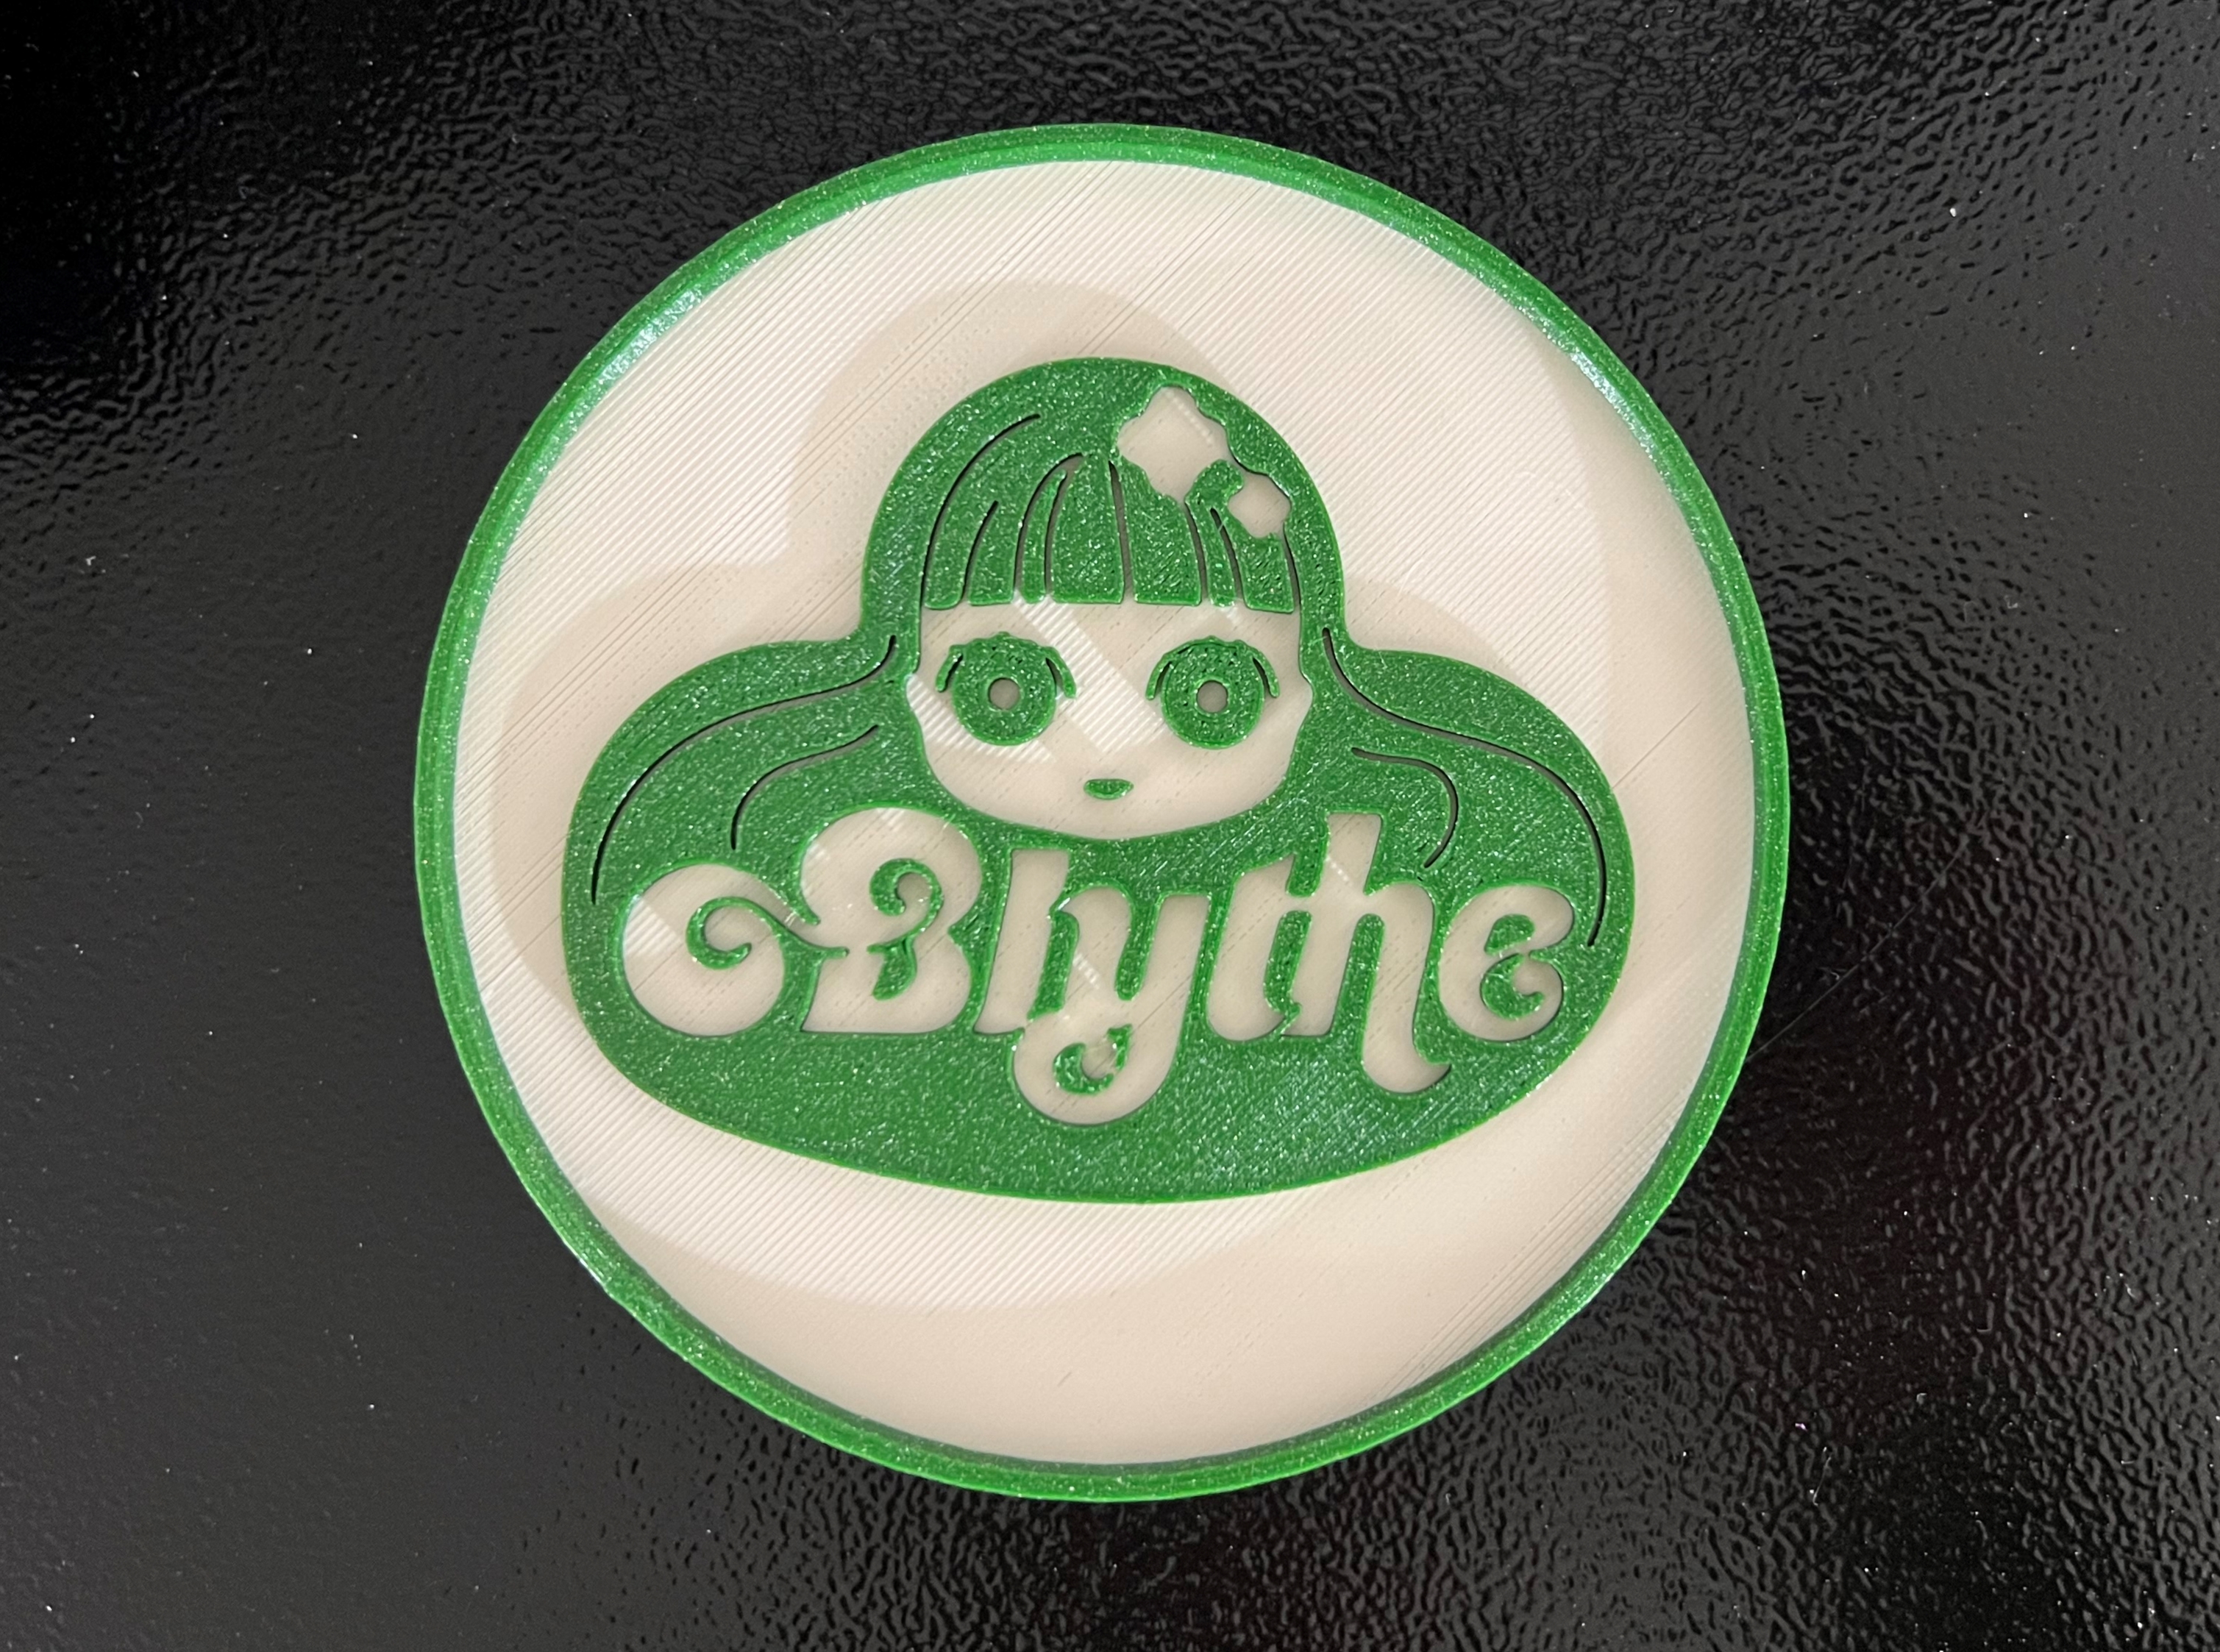 Blythe coaster - magnet - keychain set